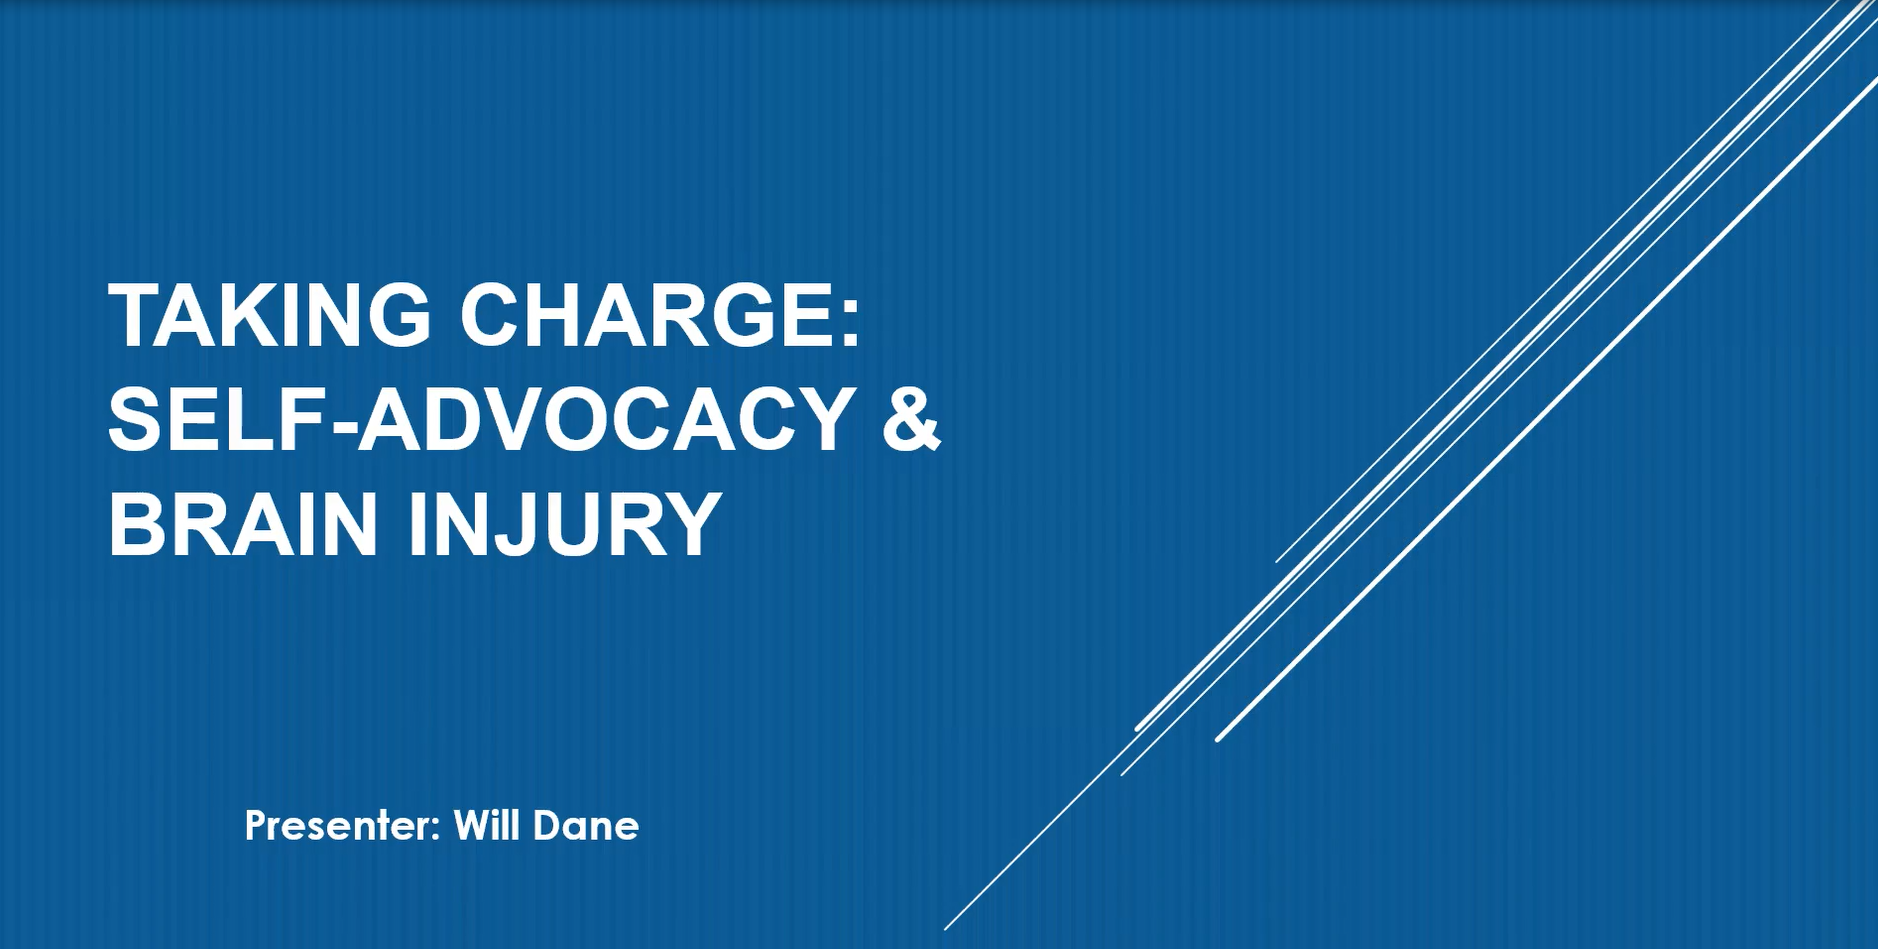 A title slide for a PBA voices webinar presentation